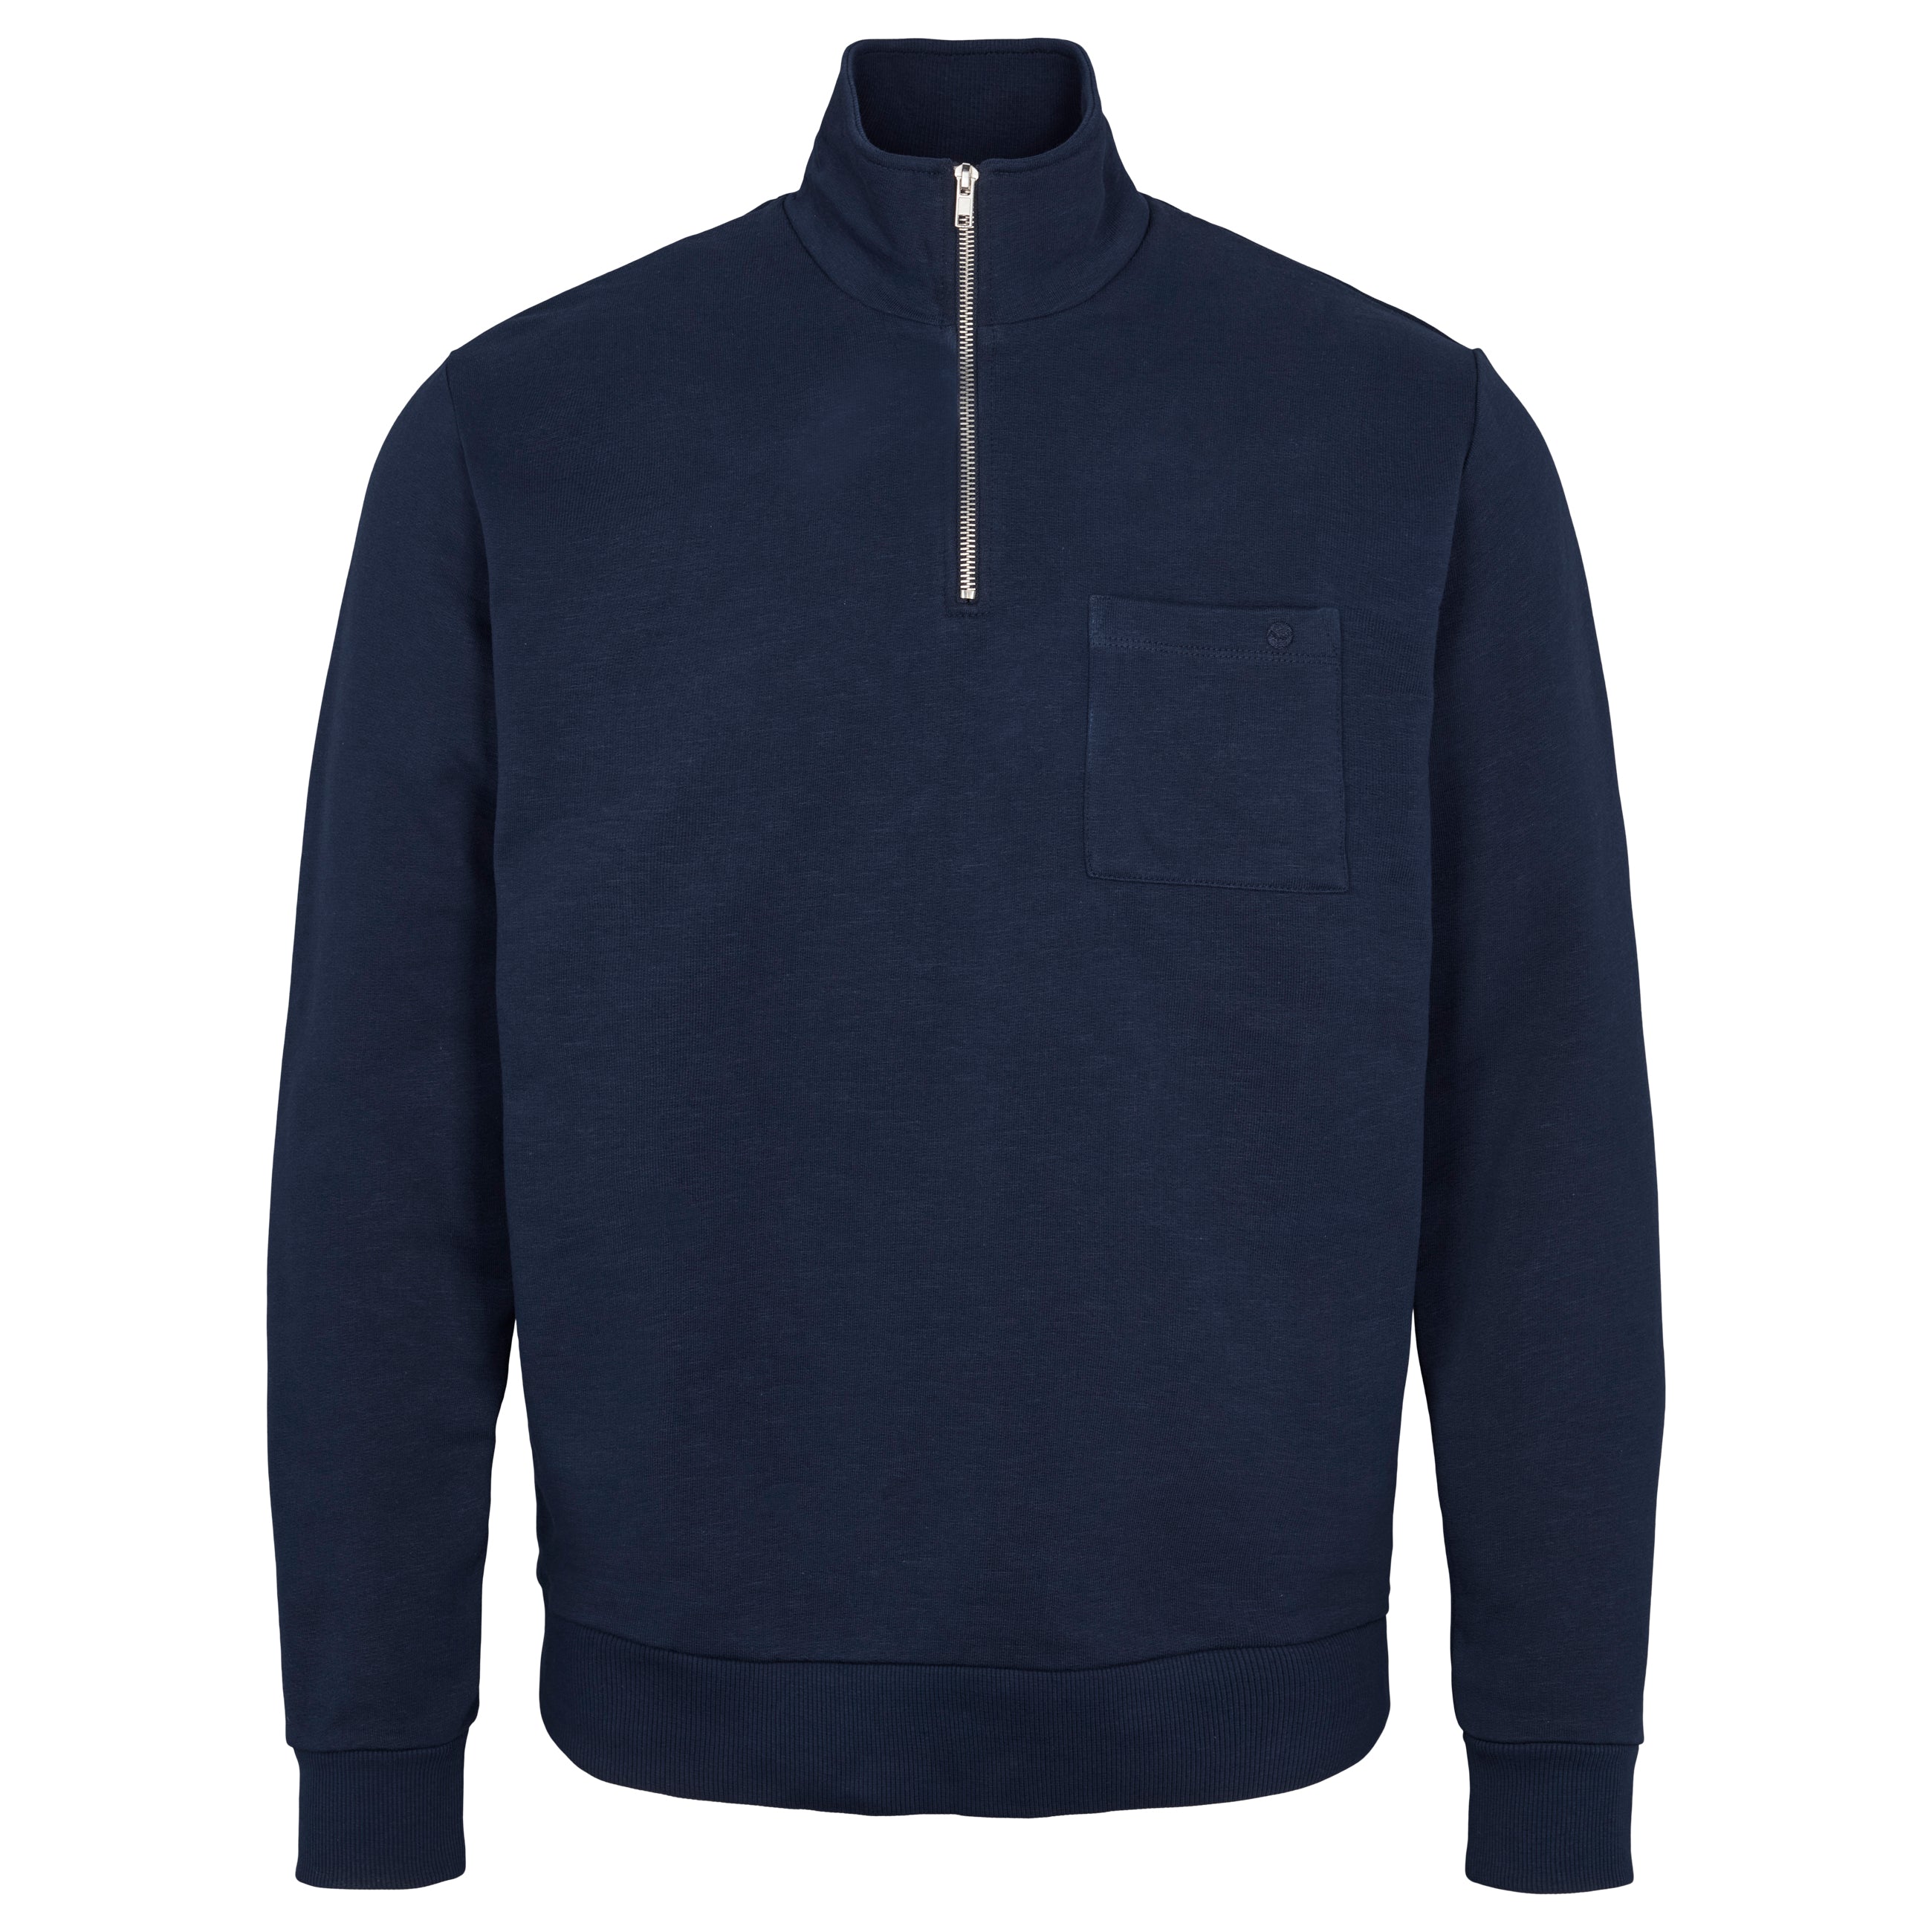 By Garment Makers Marlon GOTS Sweatshirt 3096 Navy Blazer